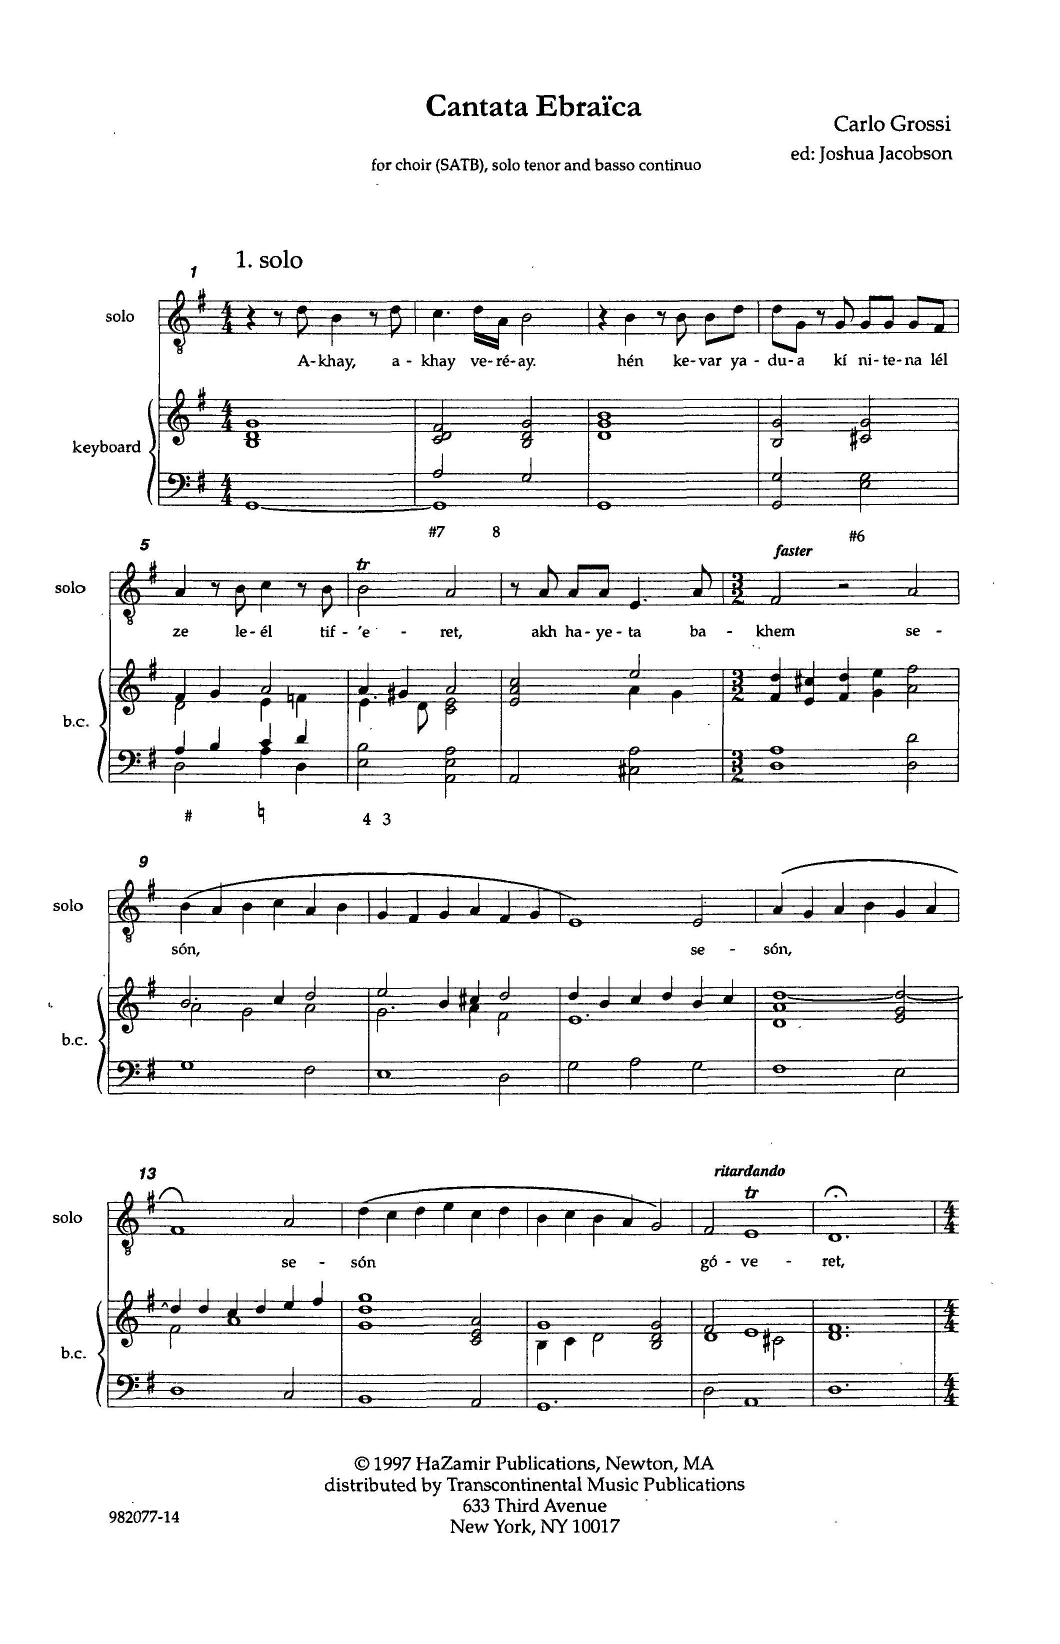 Joshua Jacobson Cantata Ebraica Sheet Music Notes & Chords for Choral - Download or Print PDF